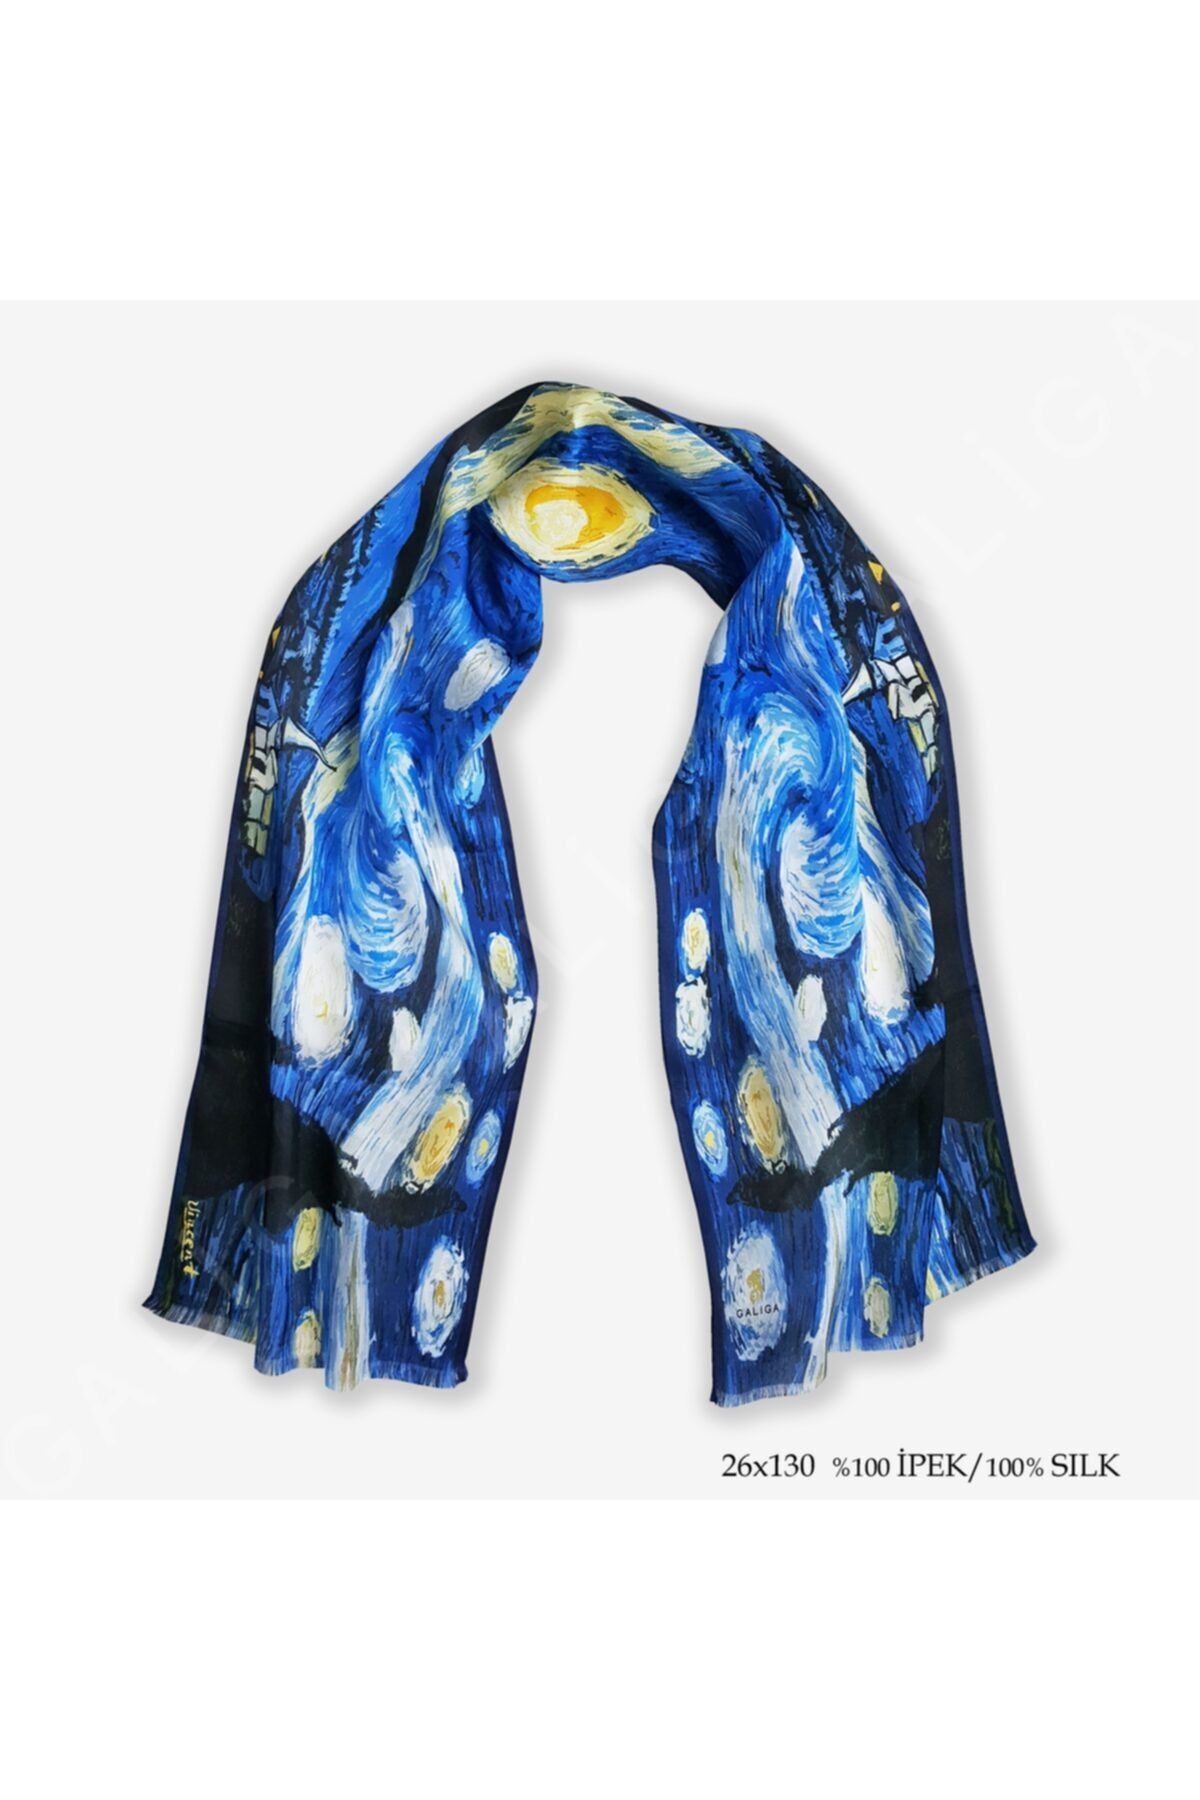 Galiga Van Gogh-starry Night %100 Ipek Fular 26*130cm 'art On Silk'